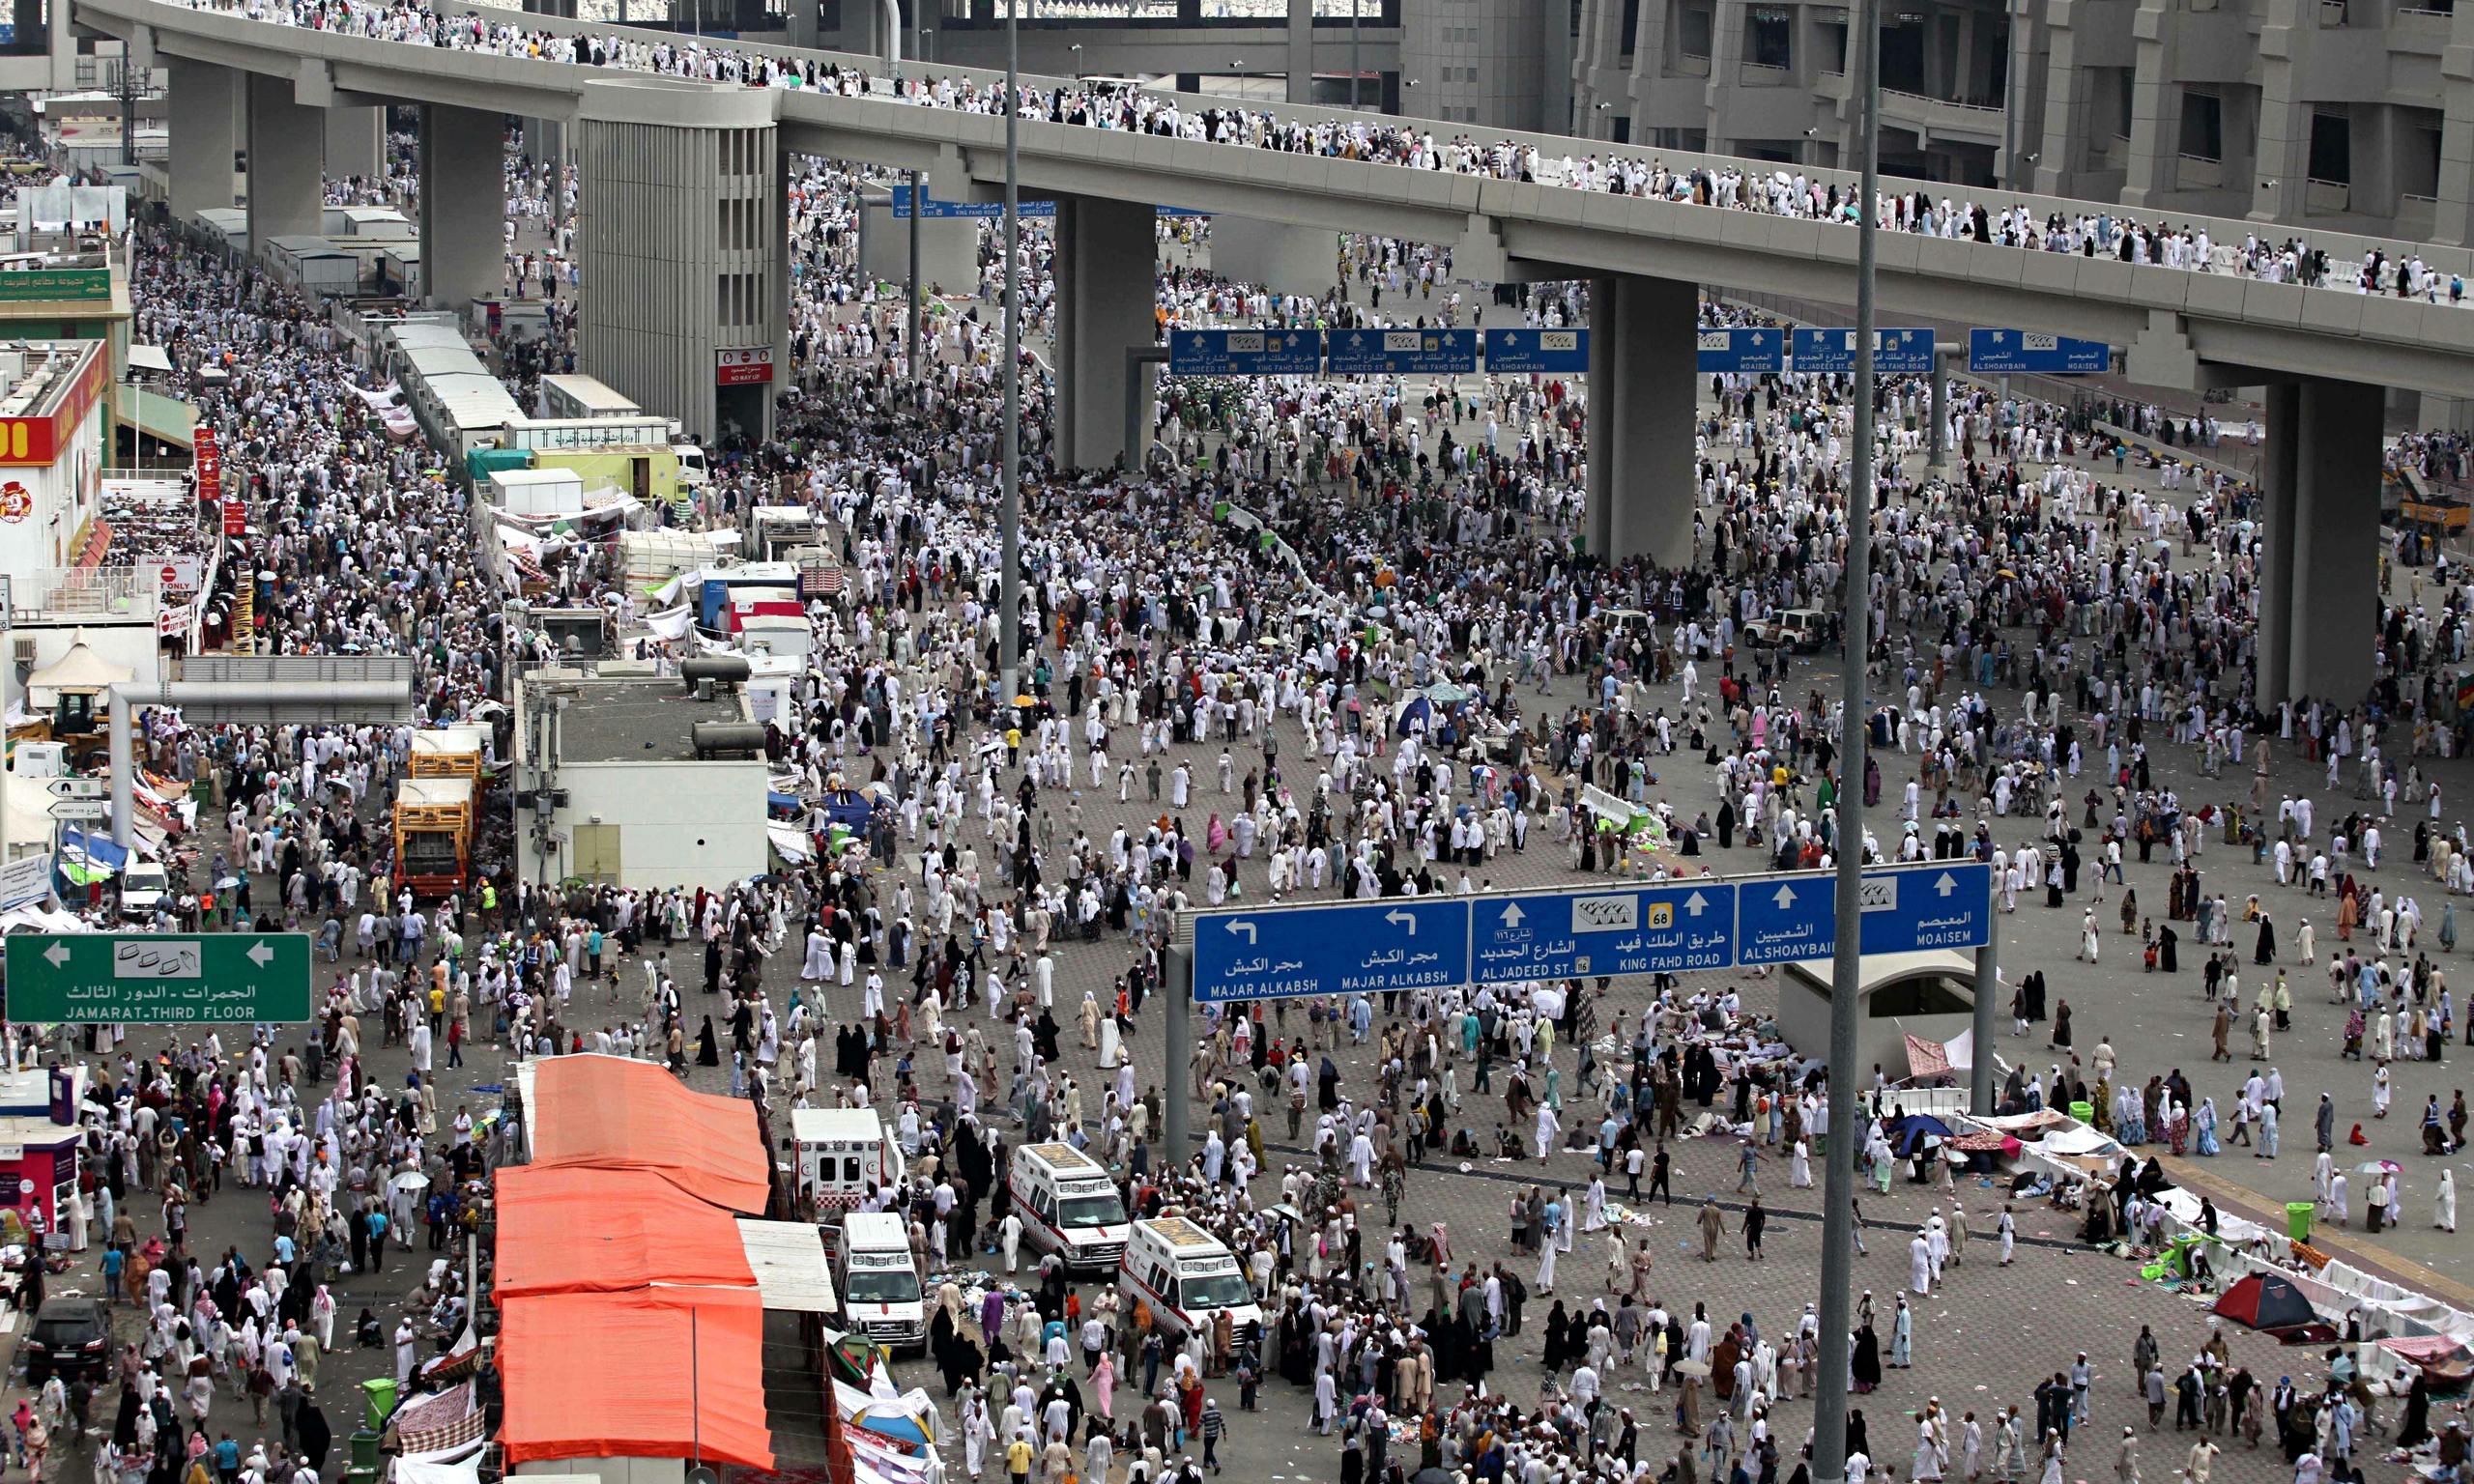 Hajj pilgrimage to Mecca epidemic-free, says Saudi Arabia | World news | The Guardian